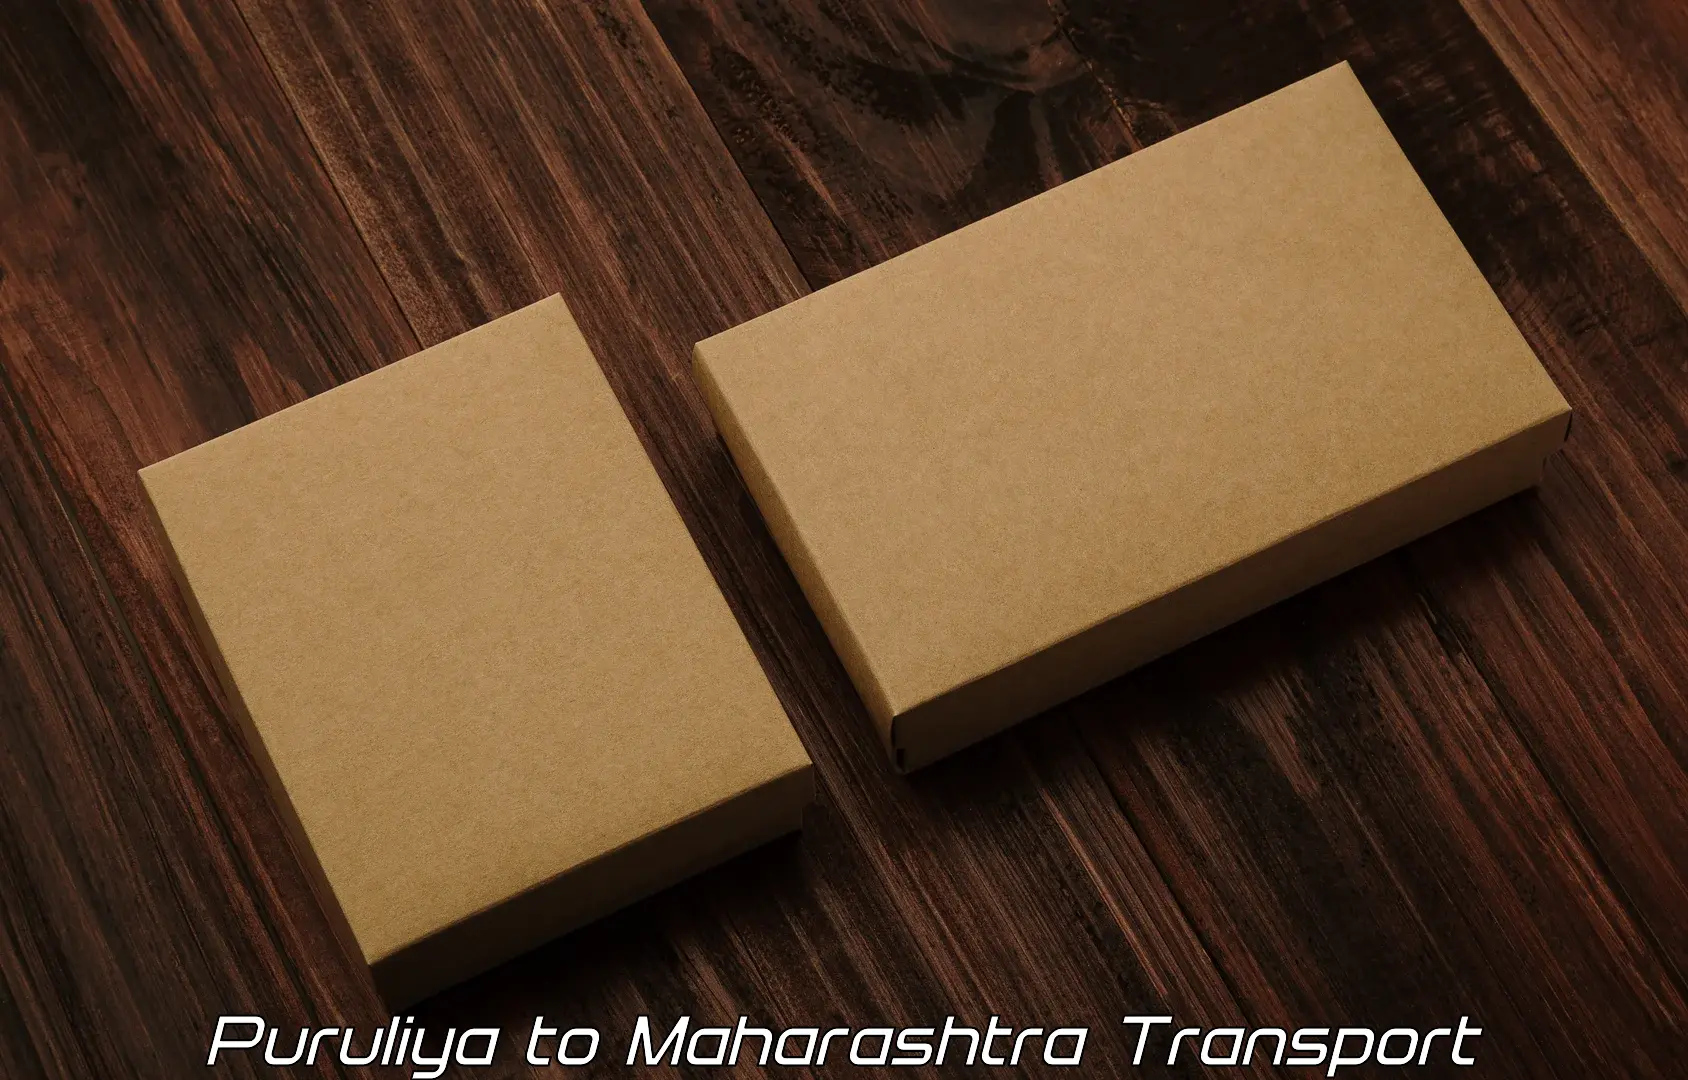 Sending bike to another city Puruliya to Maharashtra